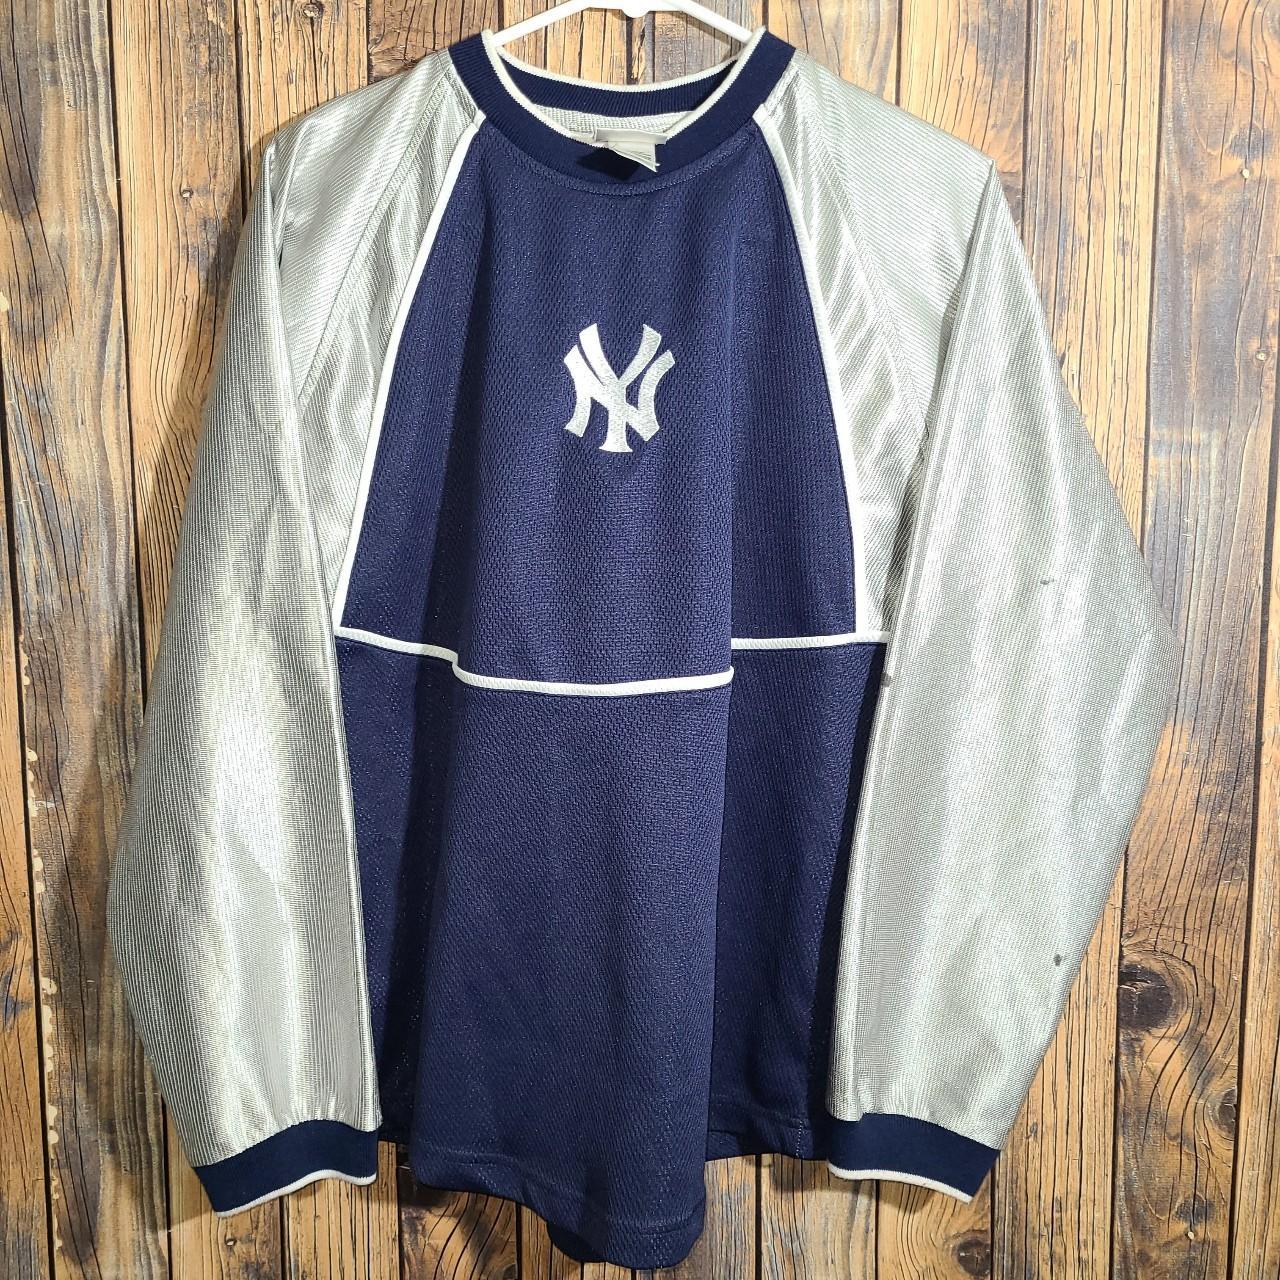 Vintage new York Yankees baseball shirt youth - Depop